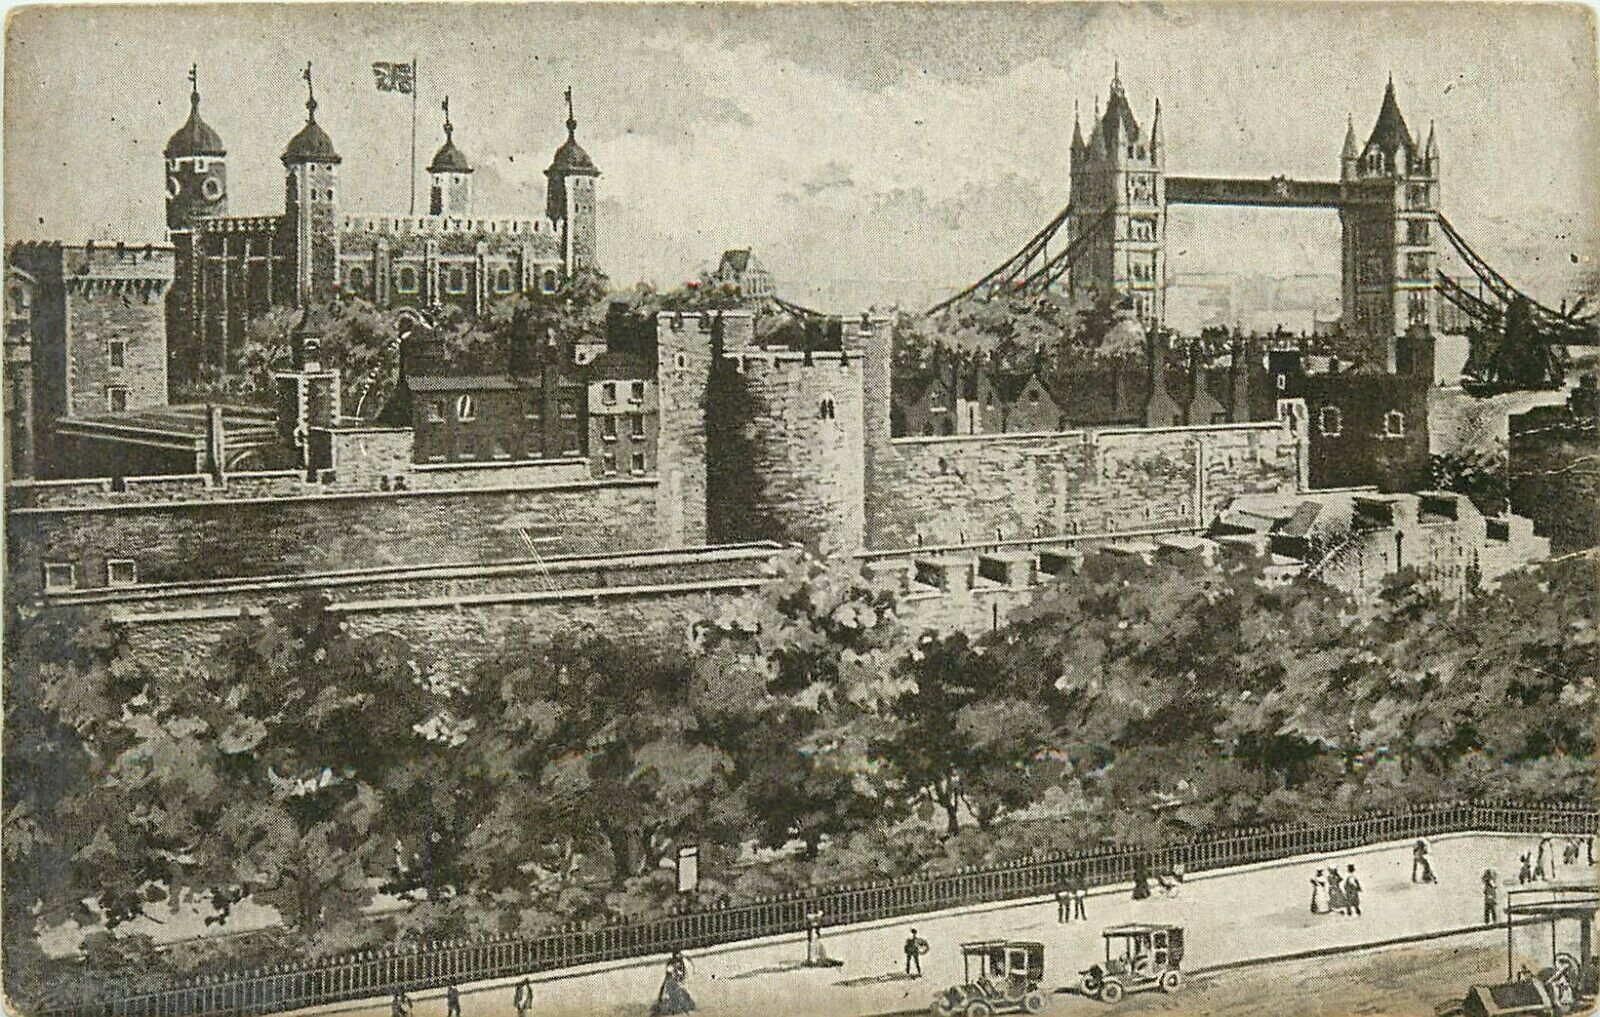 Tower of London England UK Postcard